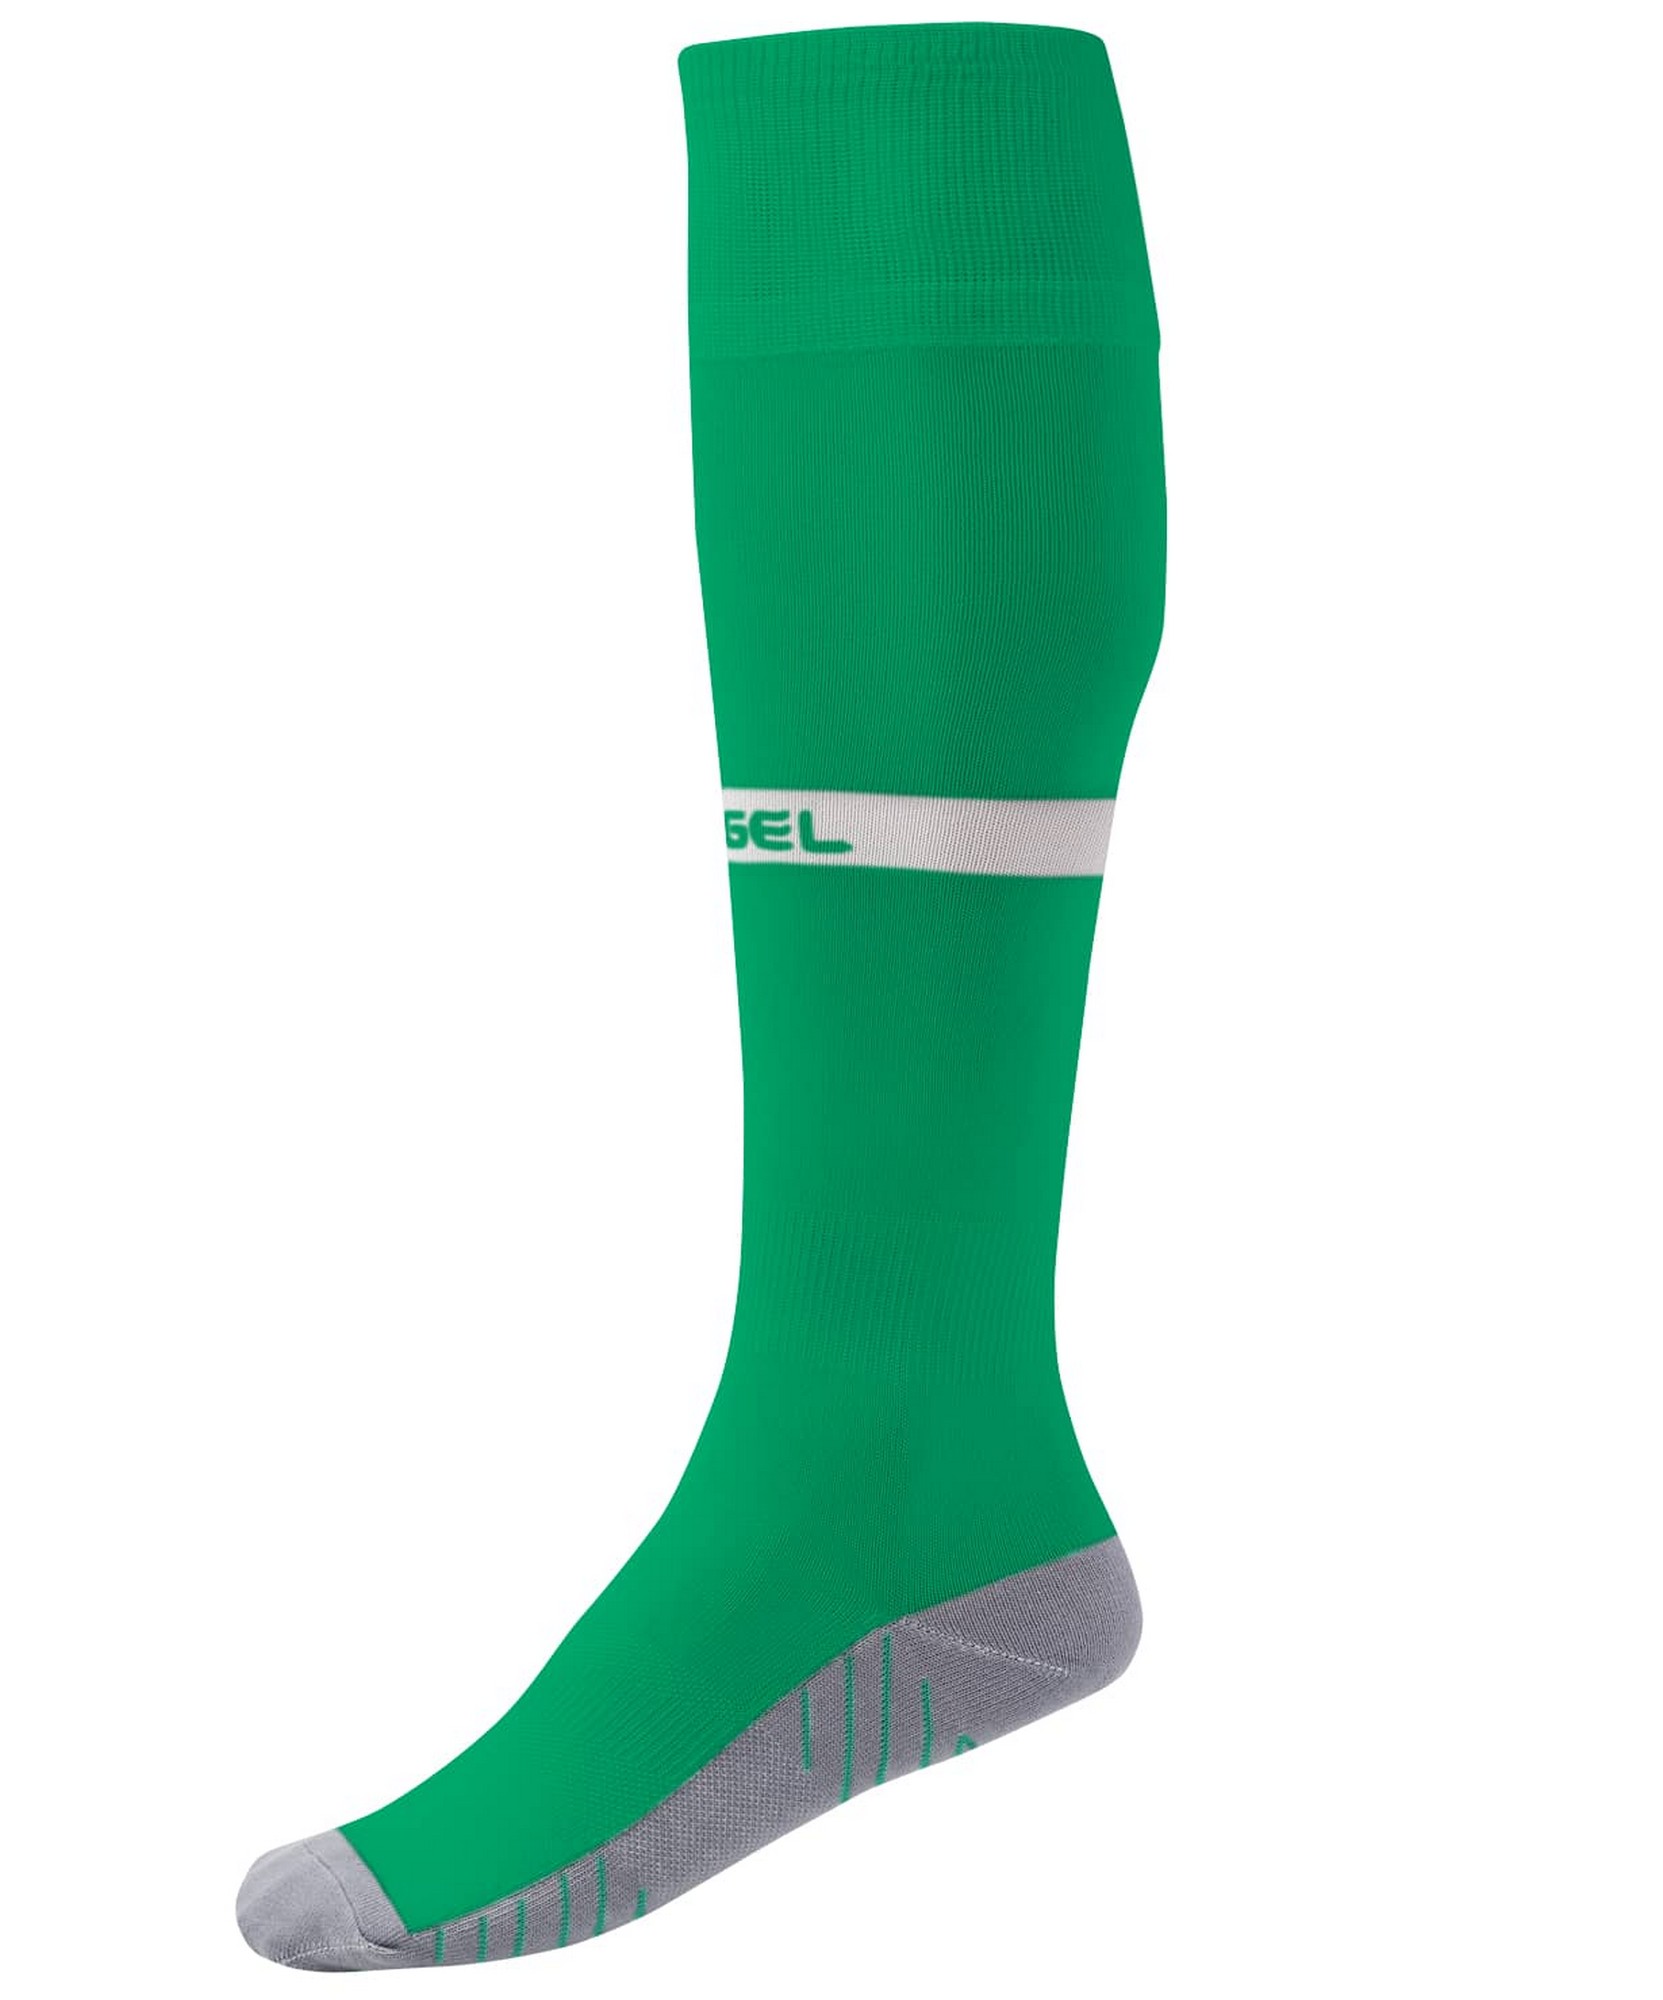 Гетры футбольные Jogel Camp Advanced Socks зеленый\белый 1663_2000